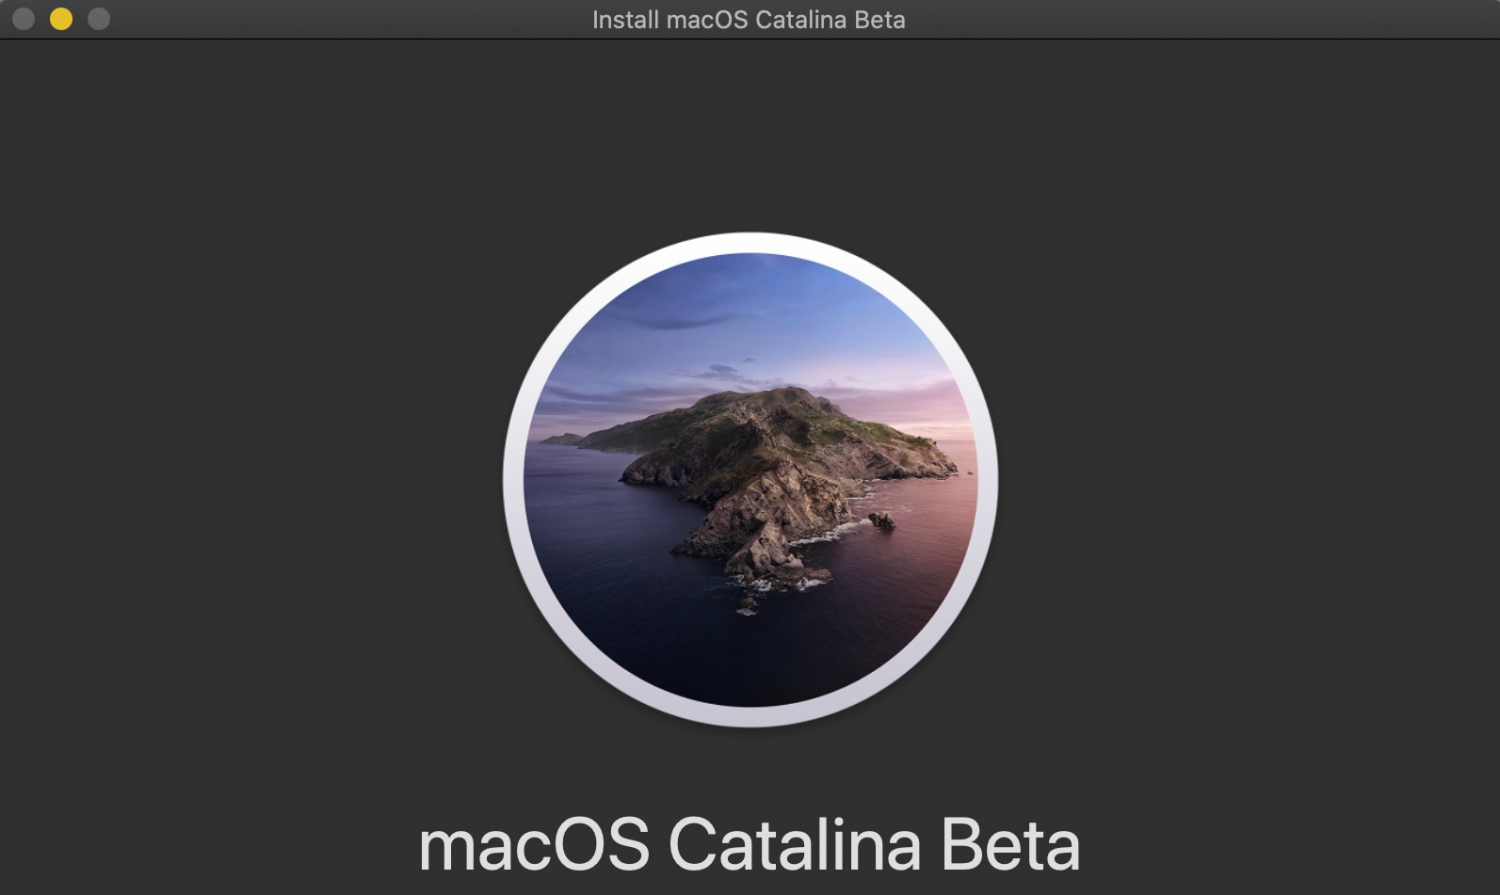 macos catalina 10.15 beta 4 circle with line